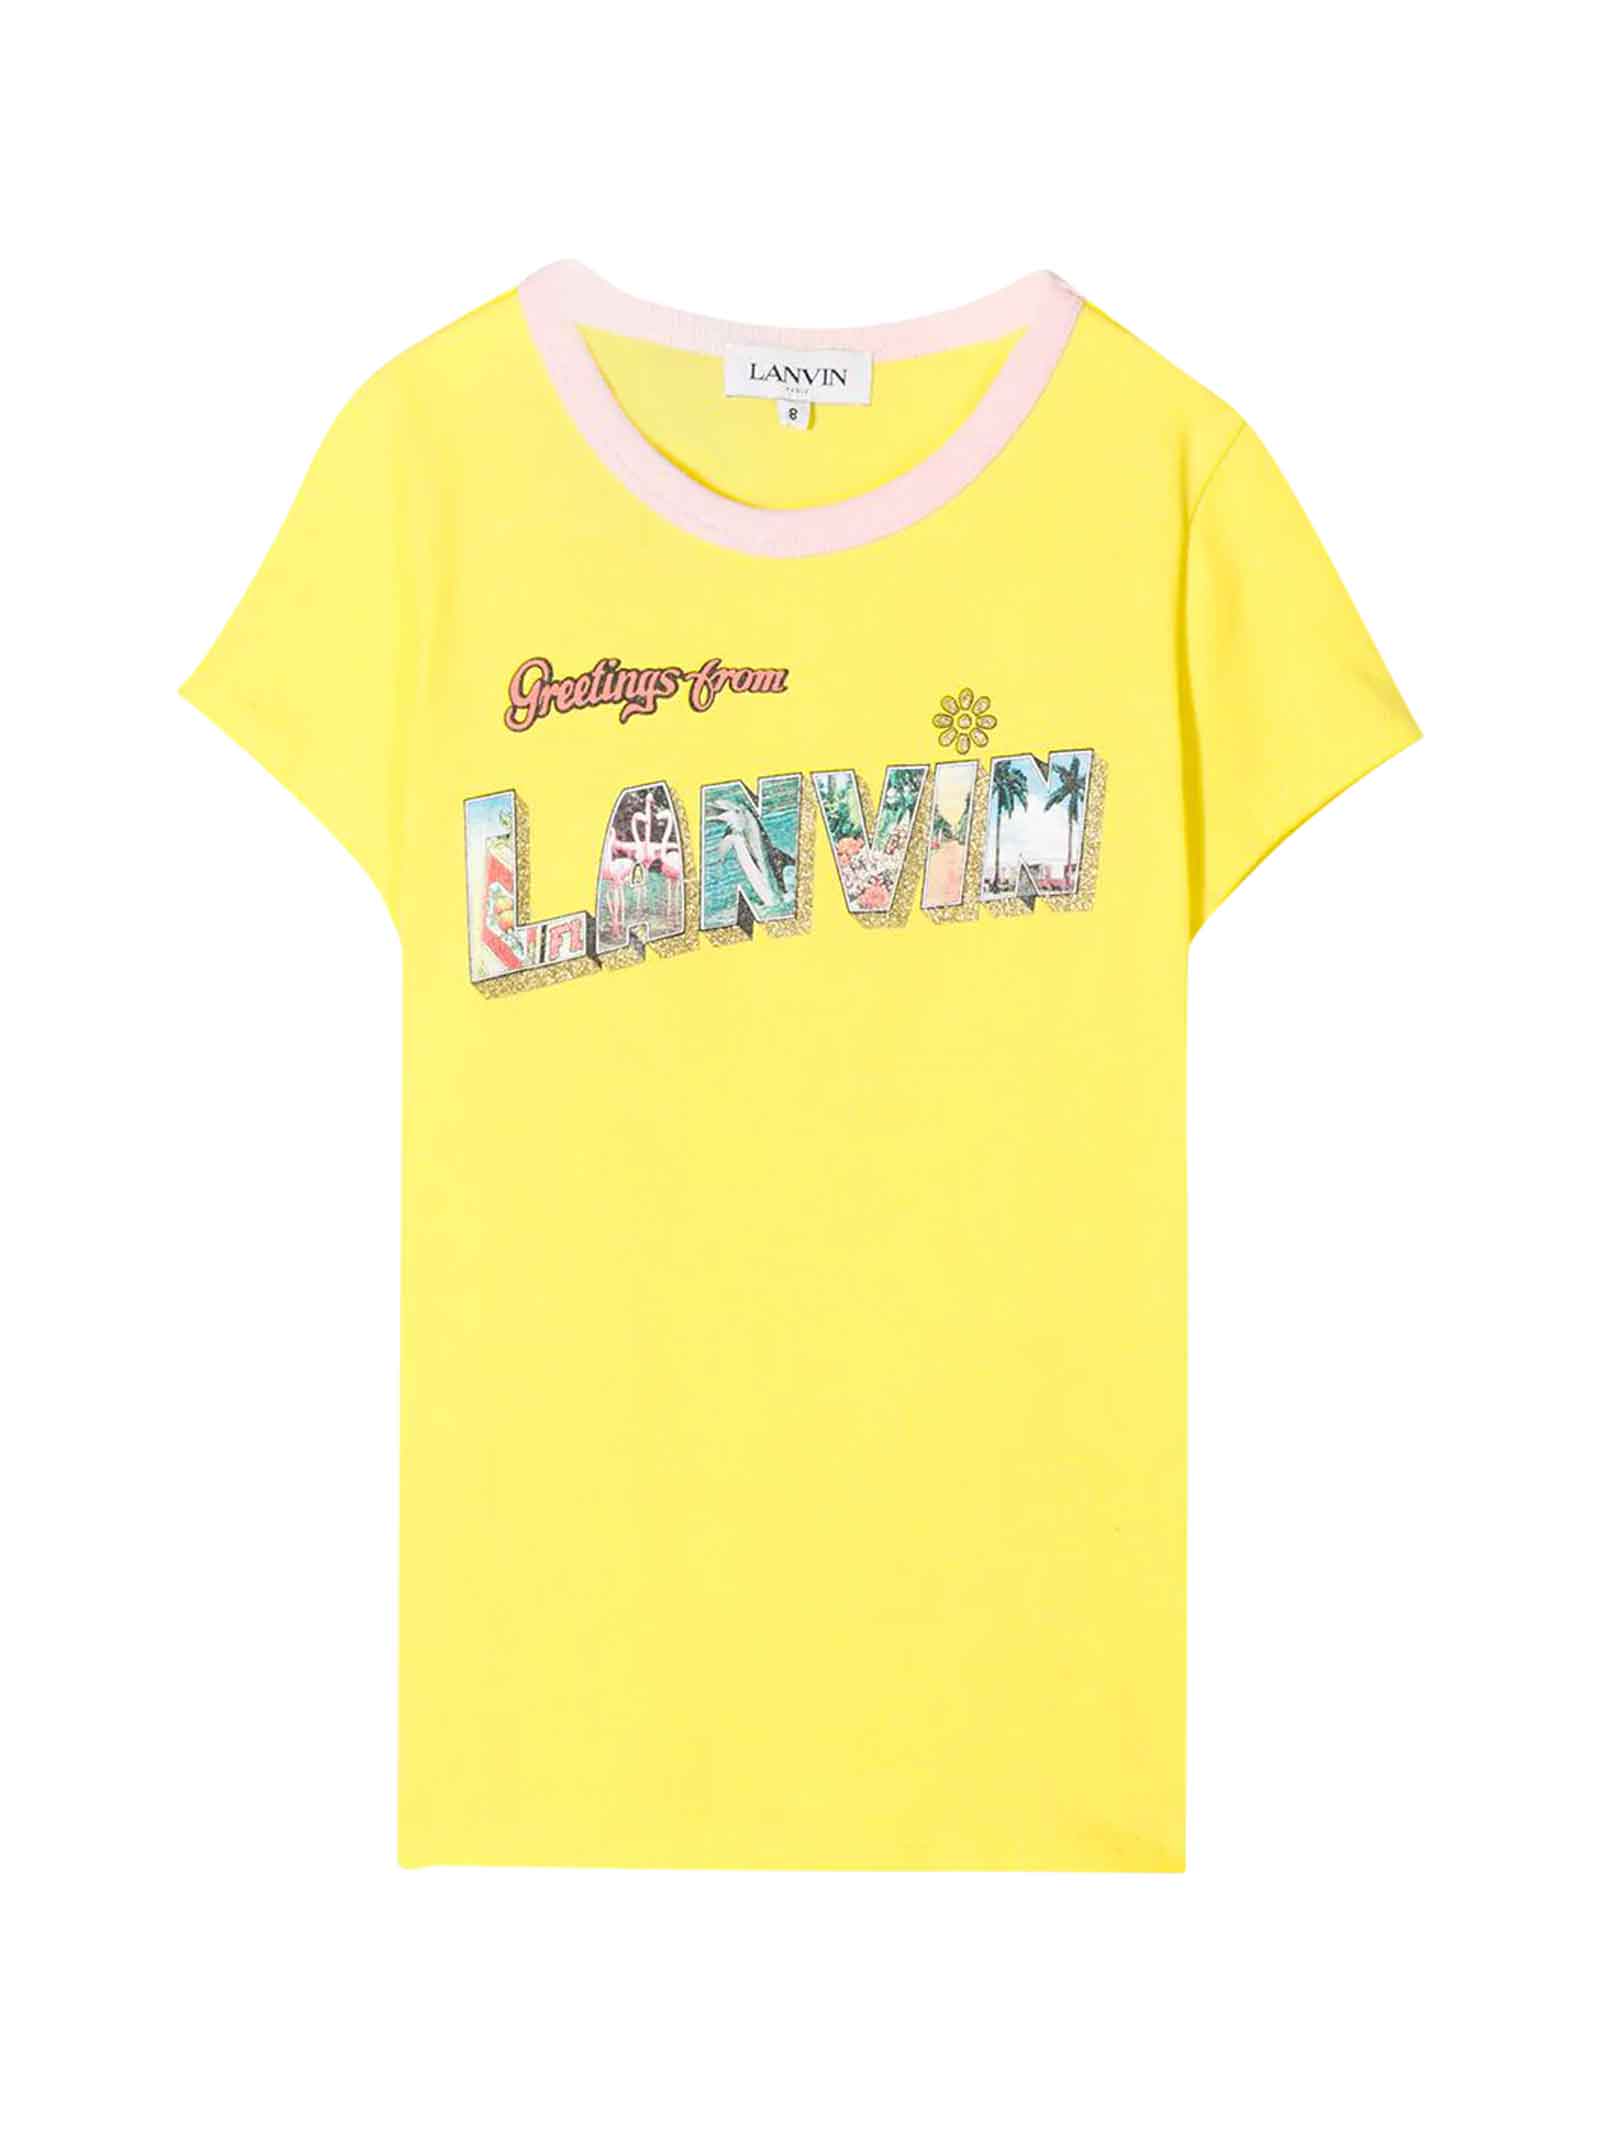 Lanvin Yellow T-shirt